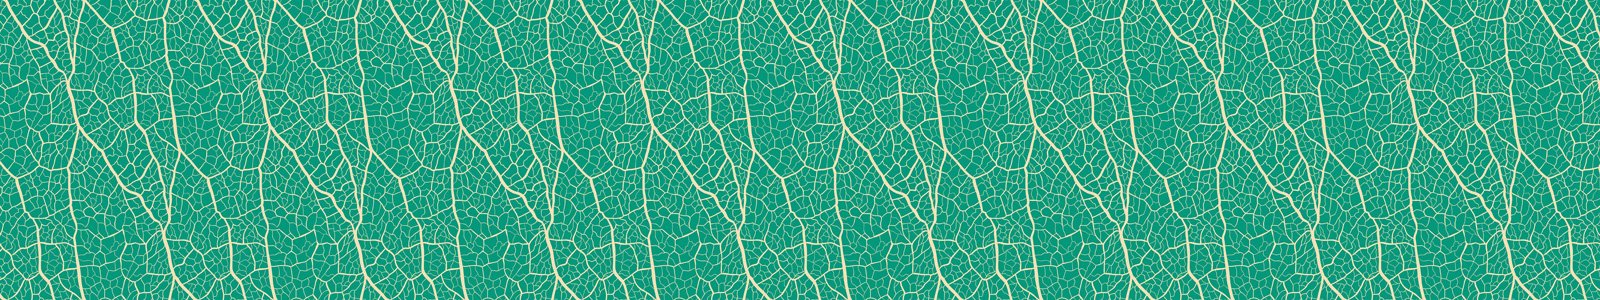 №7405 - Паттерн текстуры листьев, светлый фон